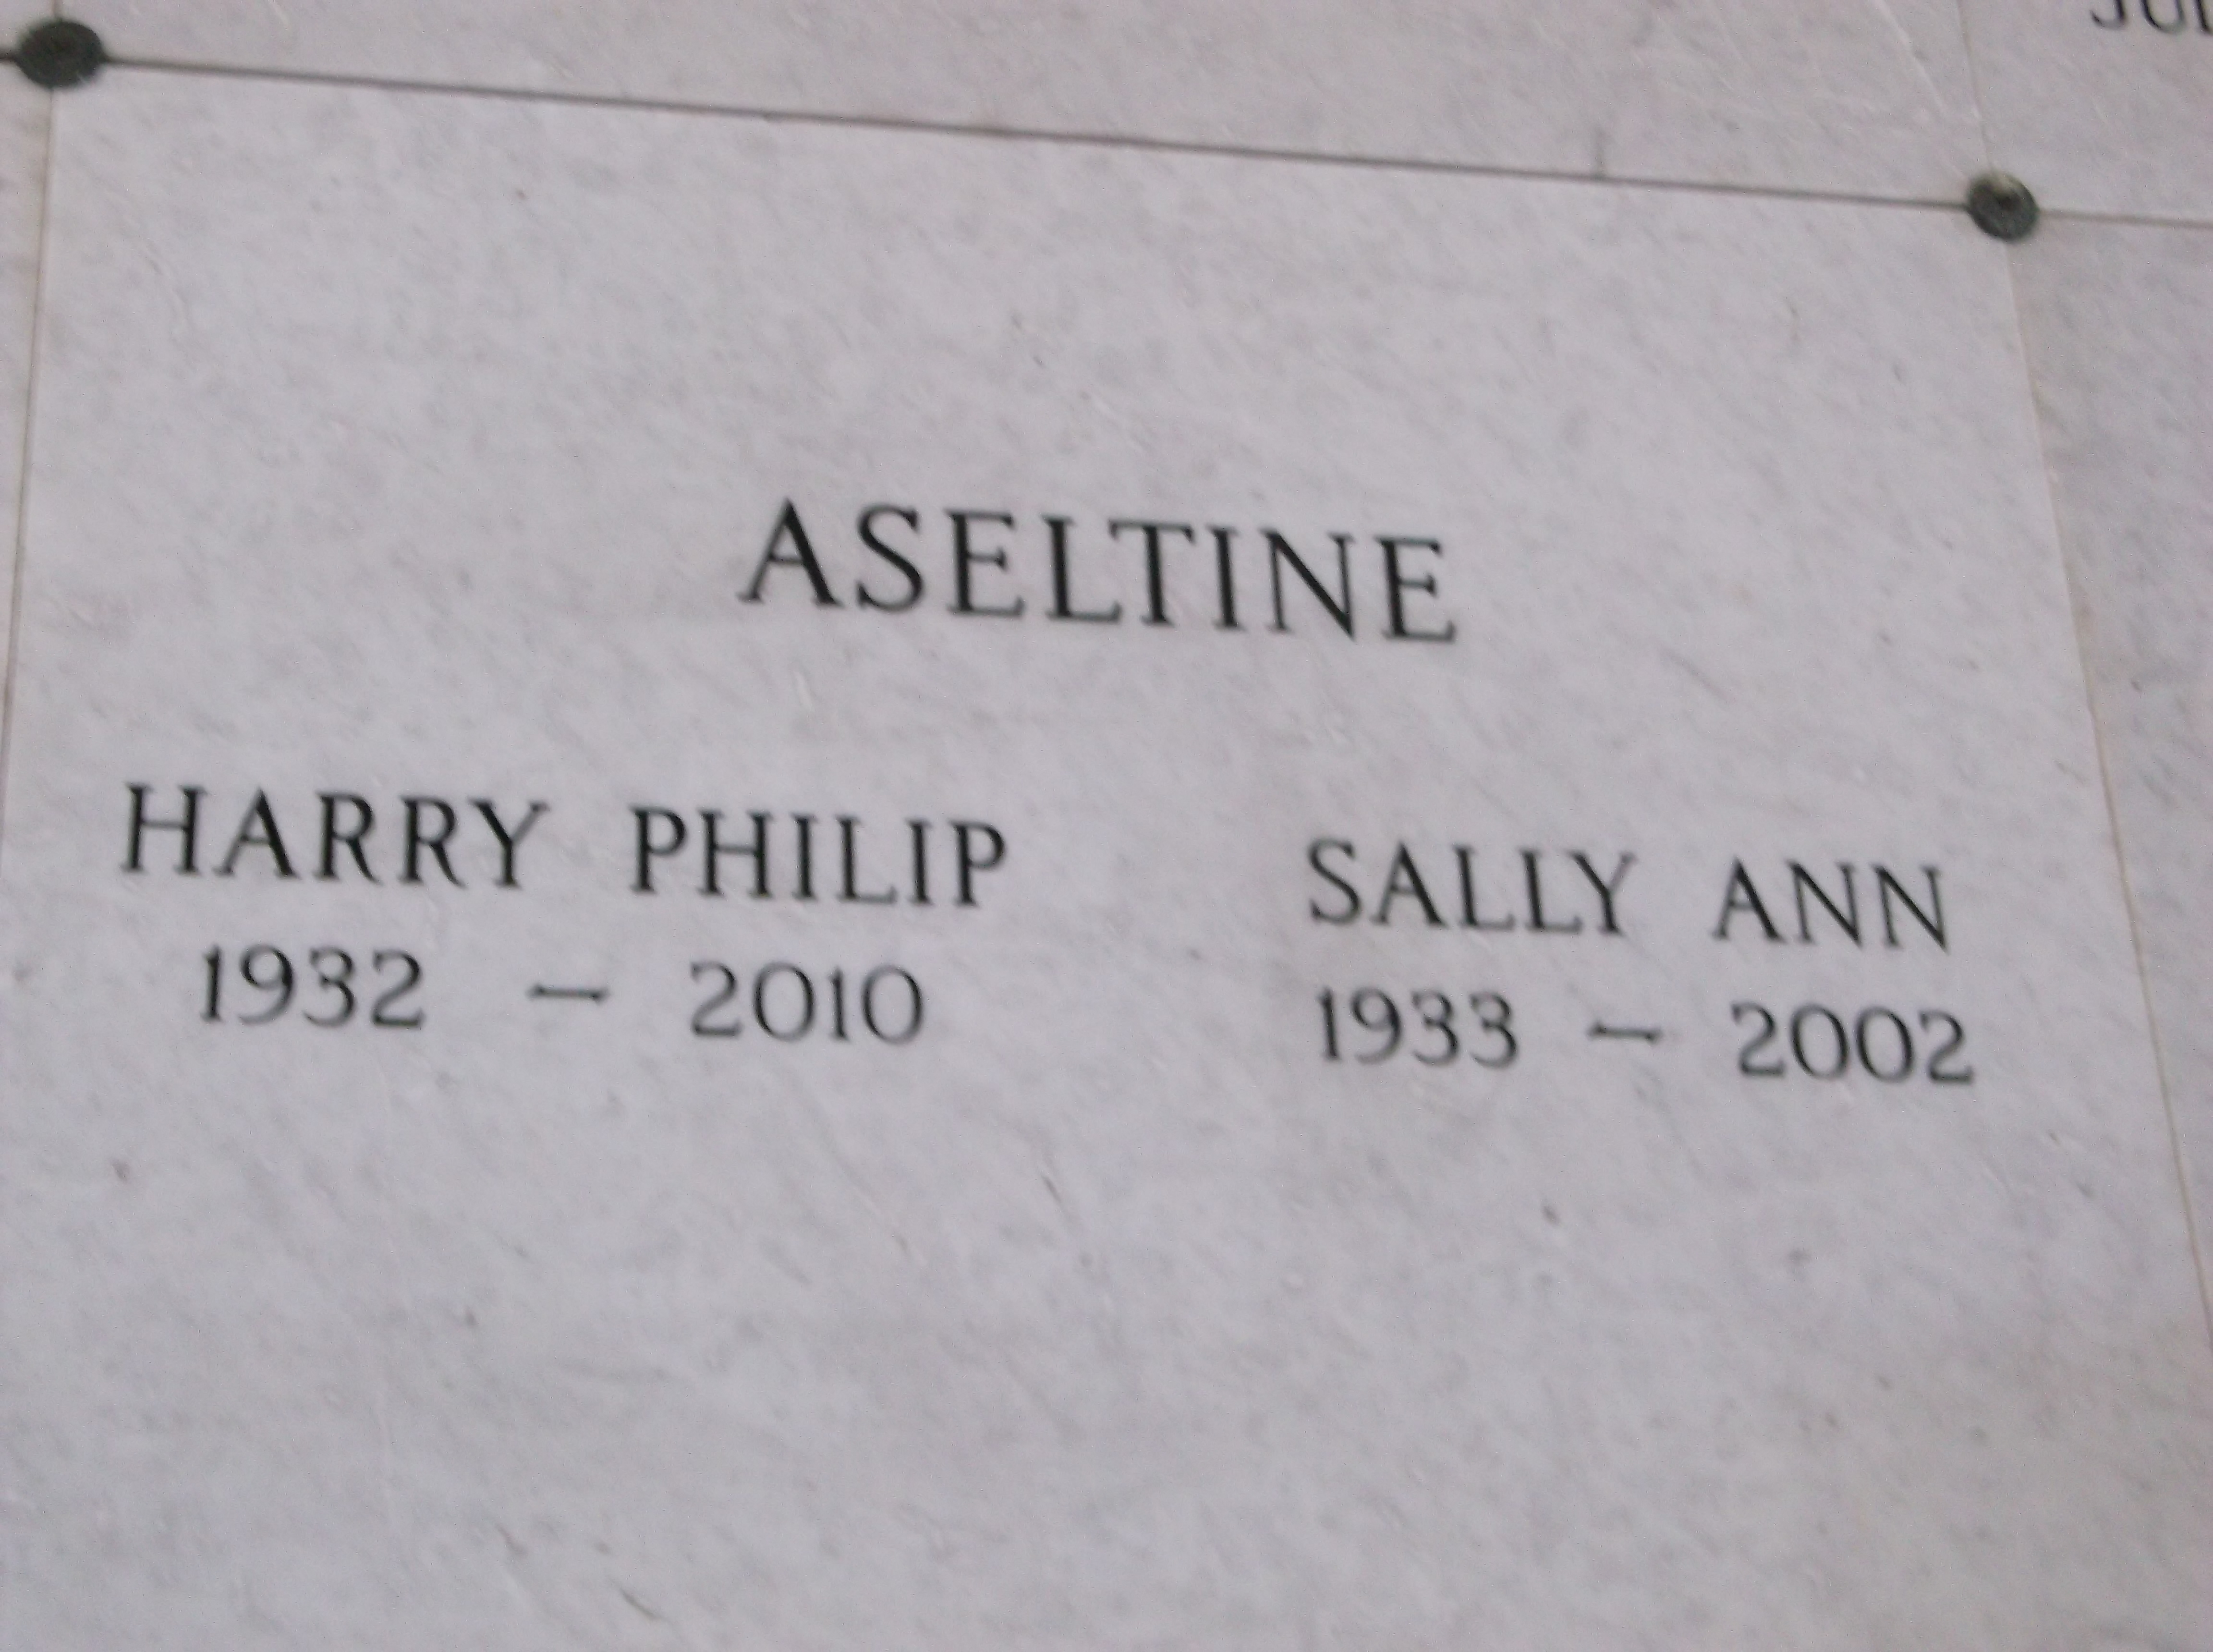 Harry Philip Aseltine